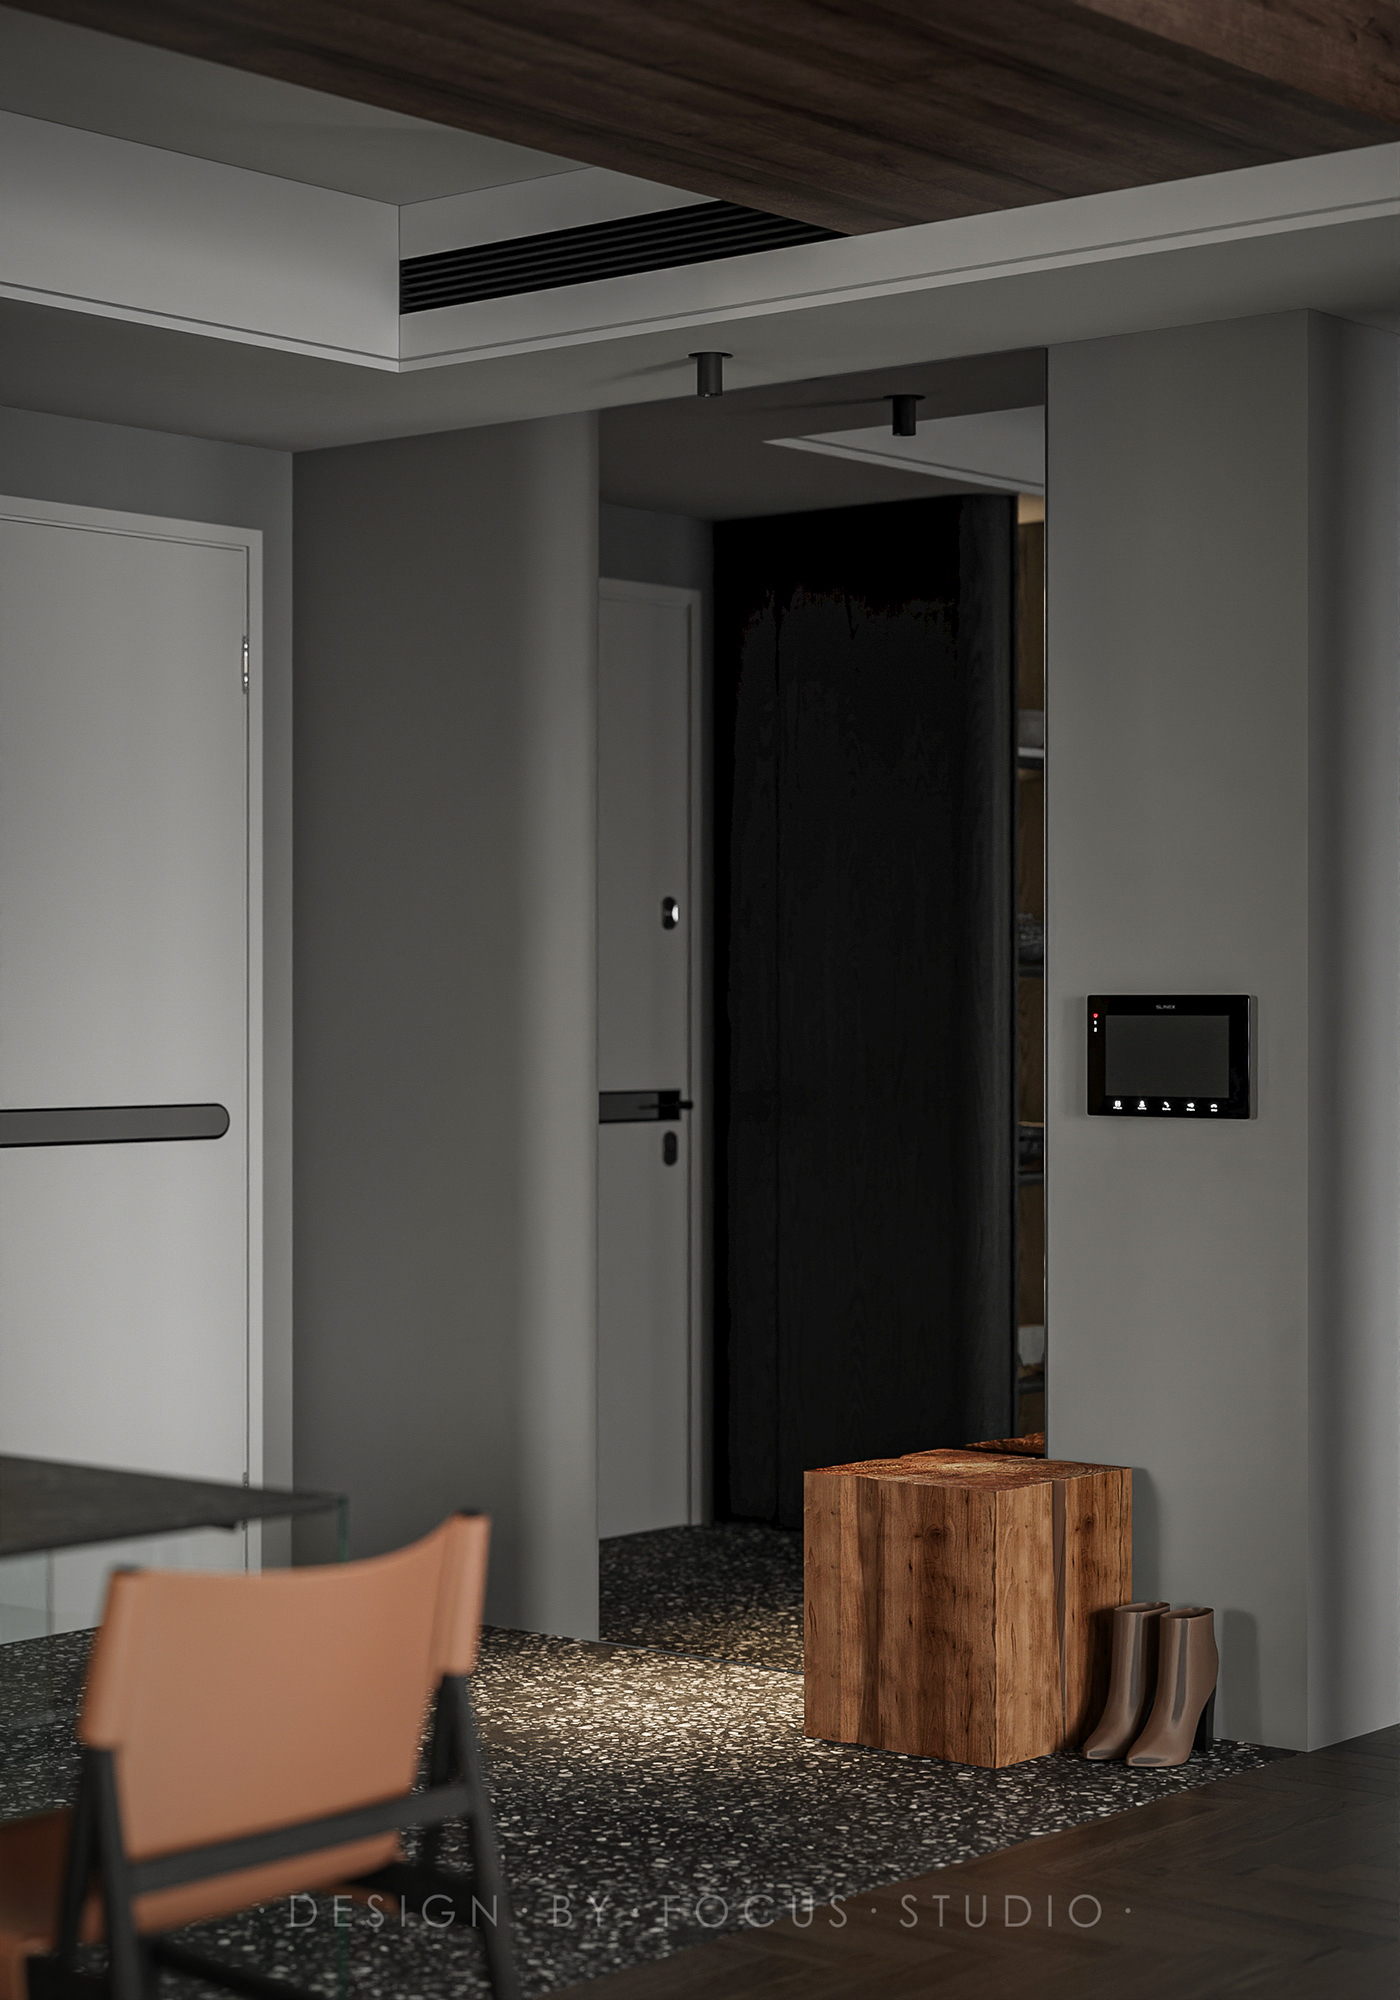 3ds max architecture corona Interior kitchen livingroom Mordern Render visualization